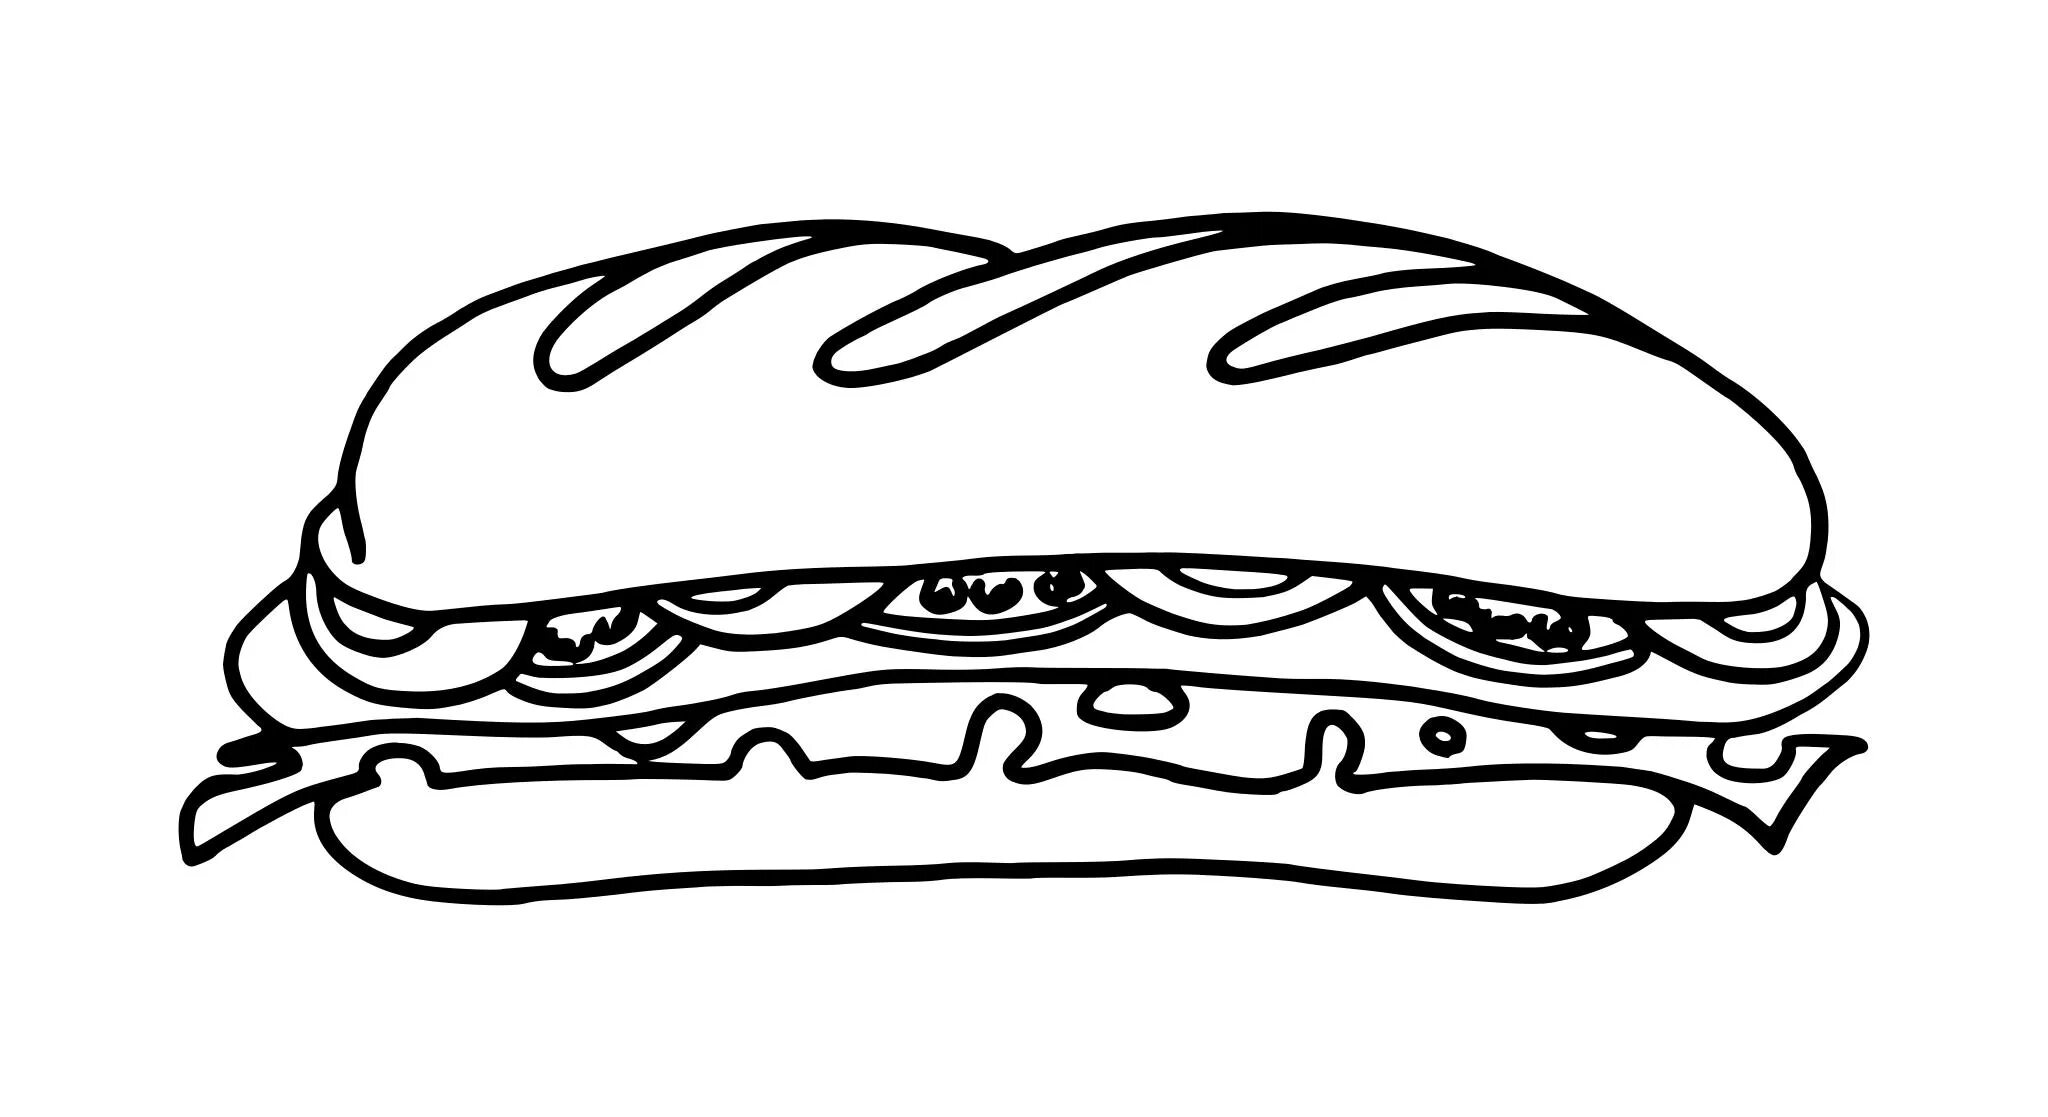 Раскраска бутерброд. Сэндвич раскраска. Эскиз бутерброда. Бутерброд раскраска для детей. Раскраски фуд